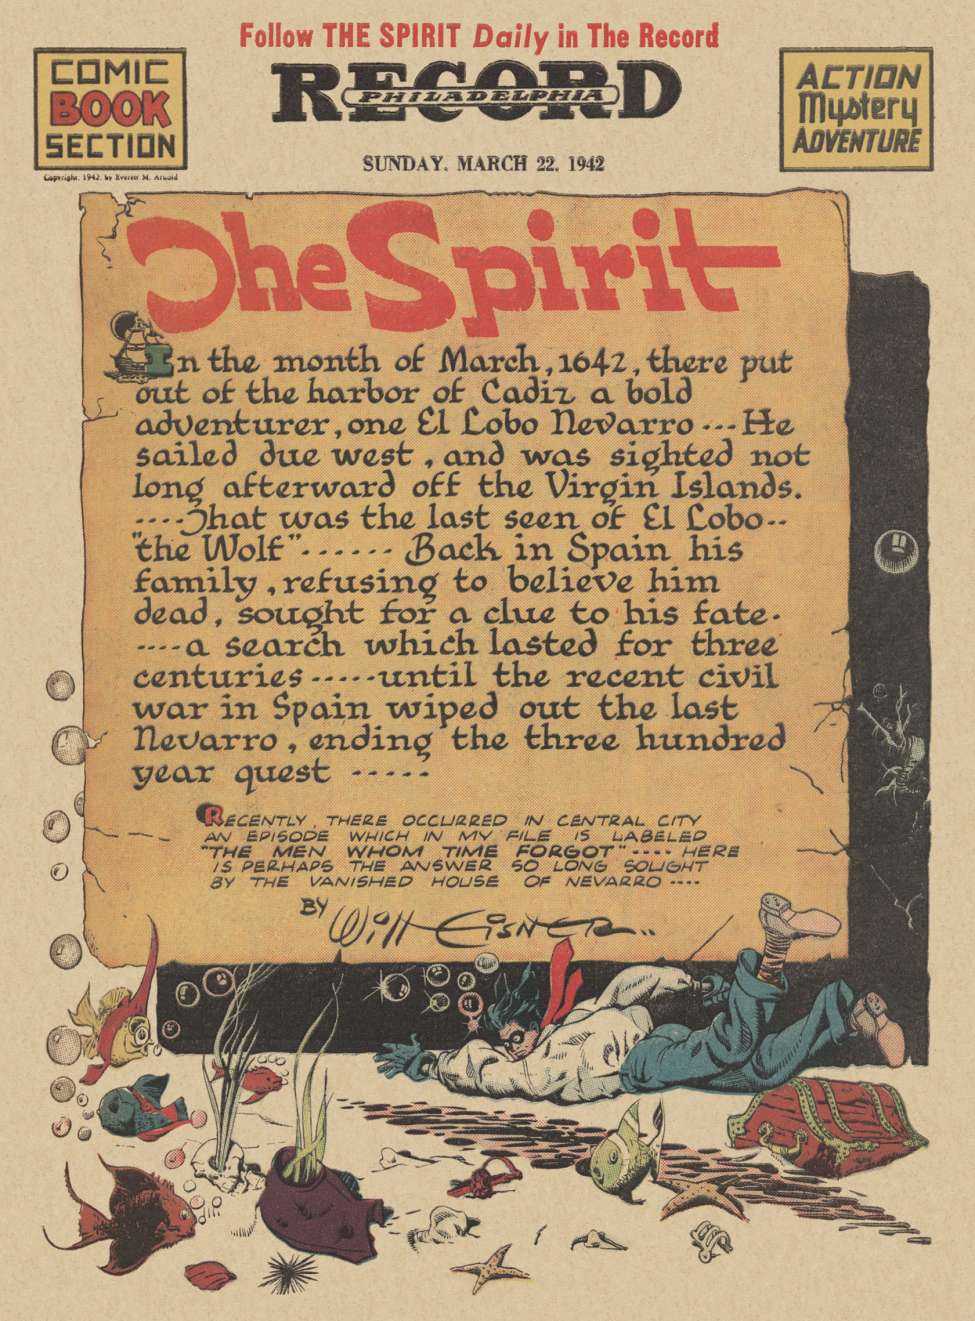 Comic Book Cover For The Spirit (1942-03-22) - Philadelphia Record